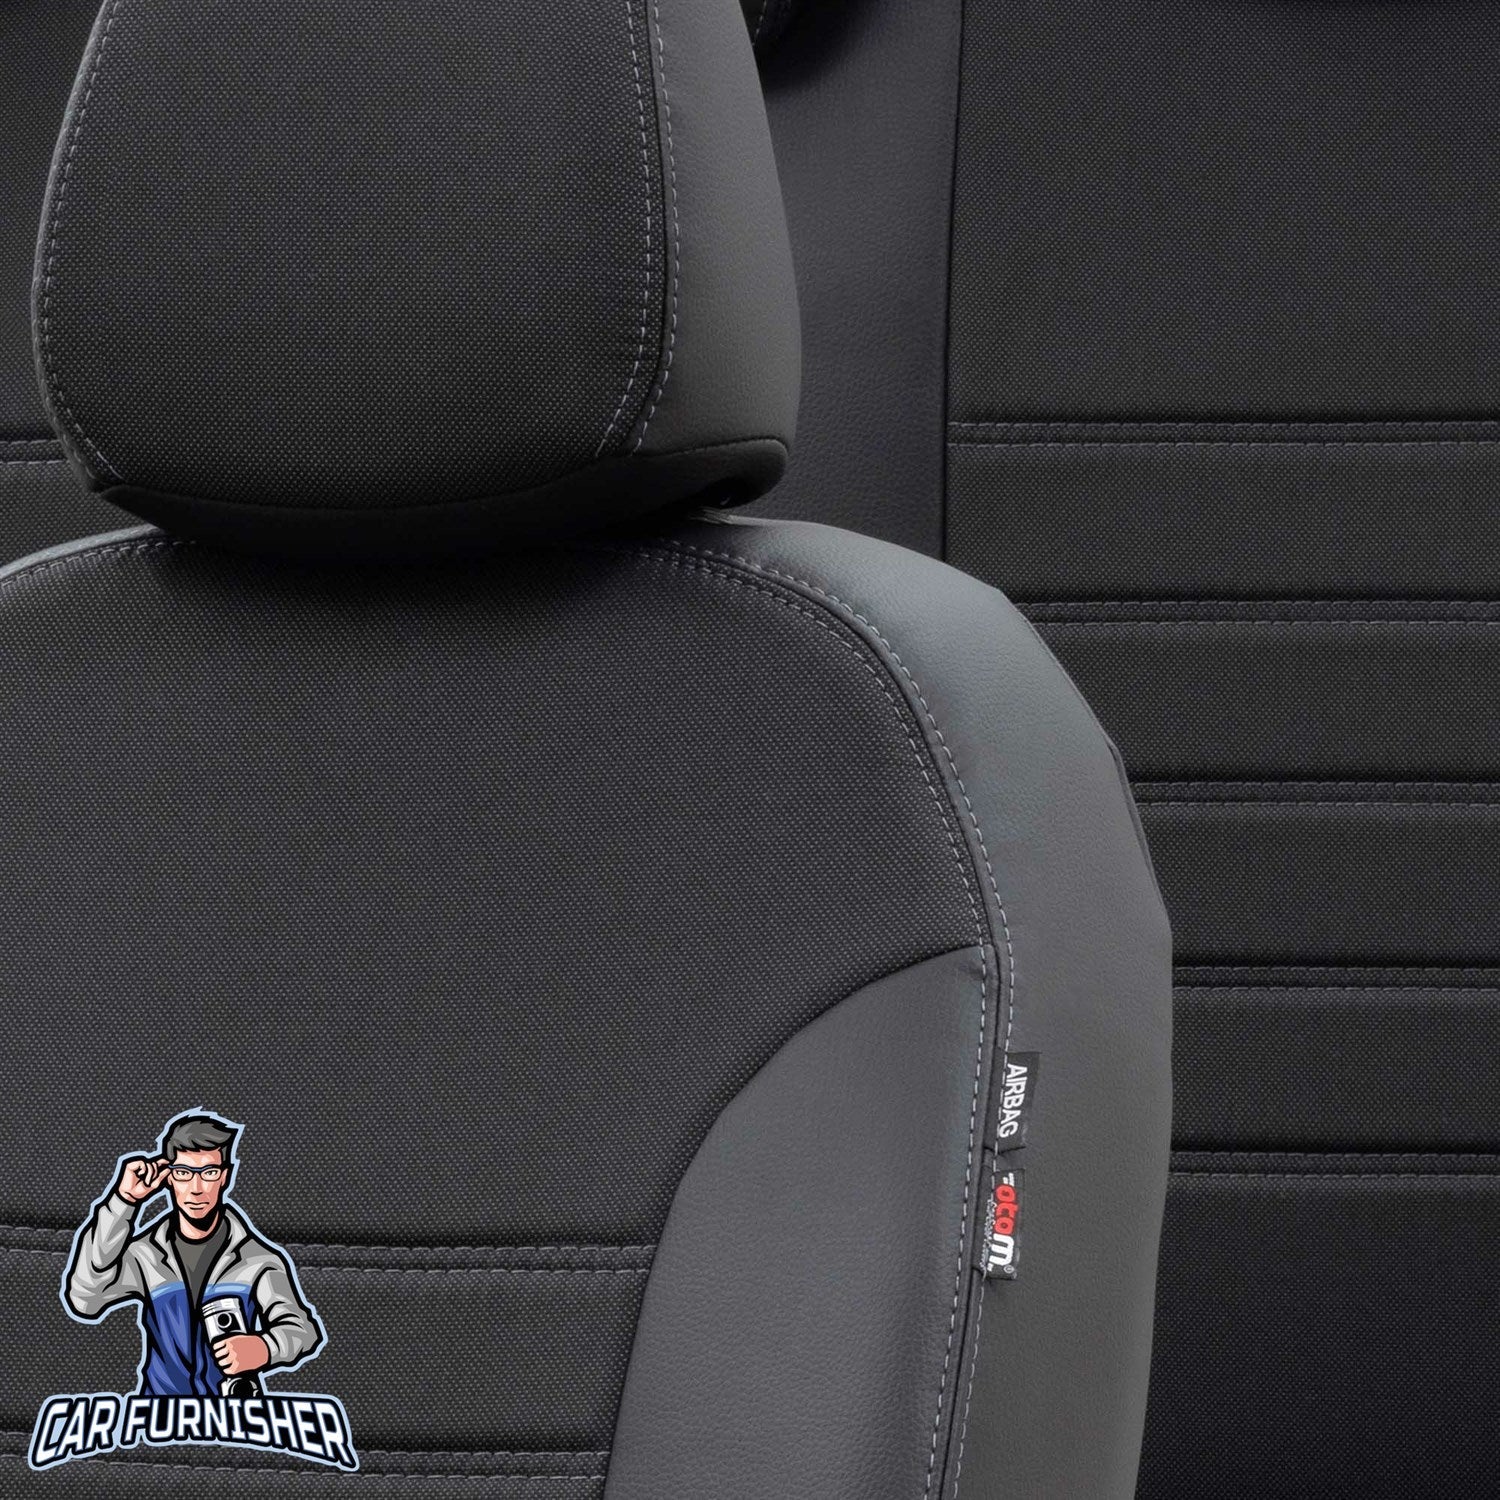 Renault Kadjar Seat Covers Paris Leather & Jacquard Design Black Leather & Jacquard Fabric